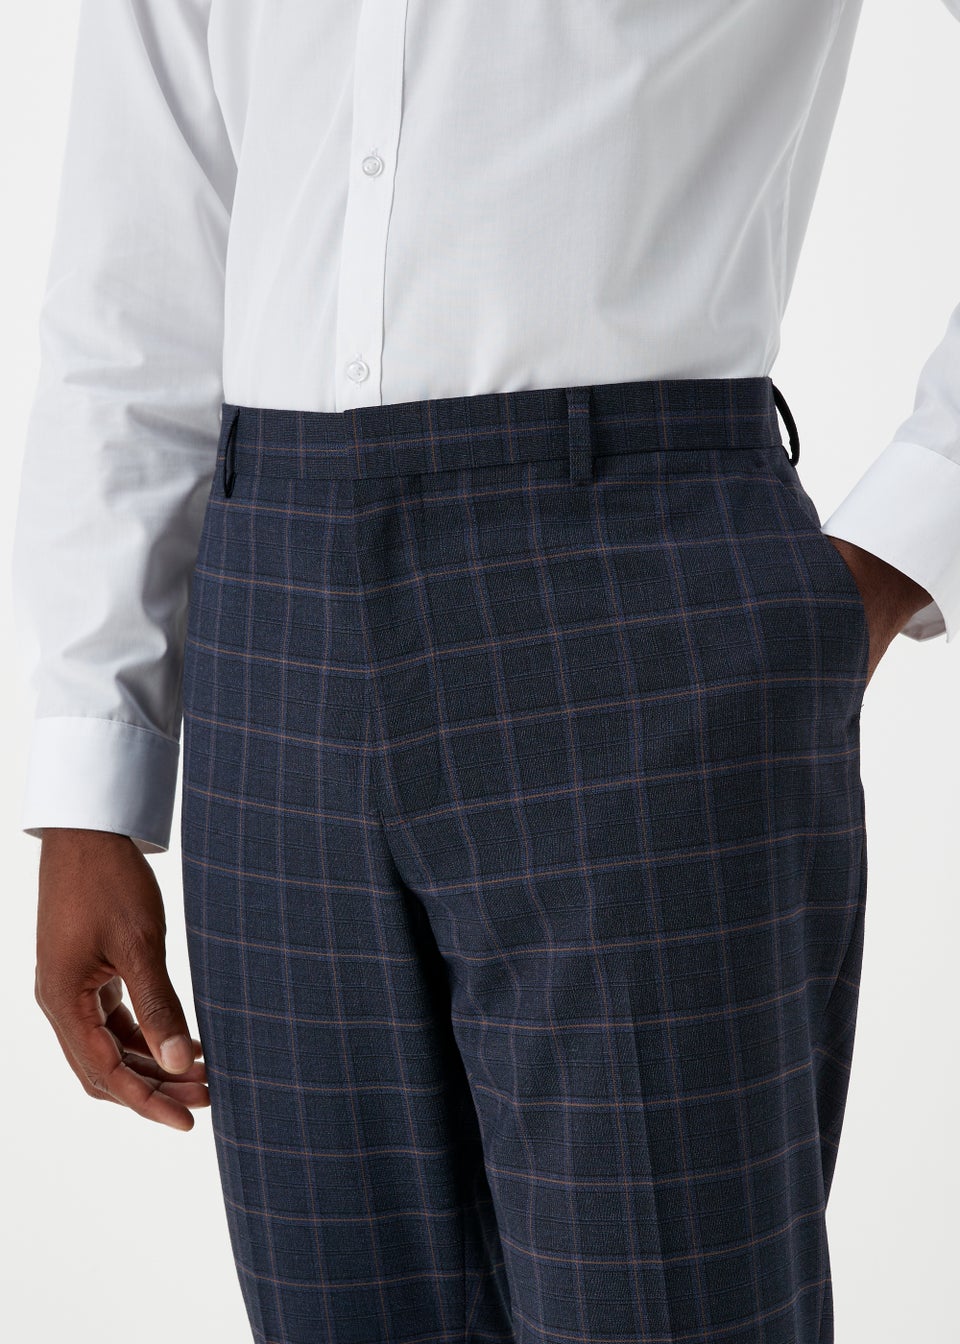 Checked Trousers Men Fashion Navy Glen Check Windowpane Pants Tailor Made  Slim James Bond Prince of Wales Checkered Dress Pants - AliExpress